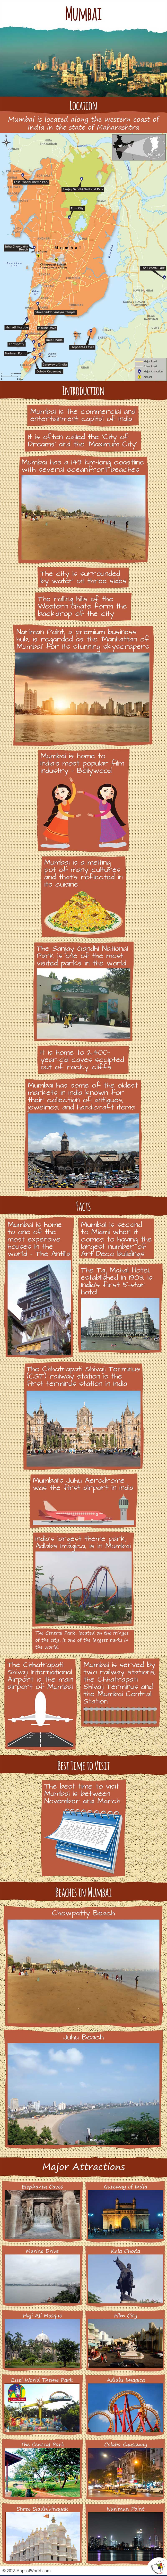 Infographic Depicting Mumbai Tourist Attractions